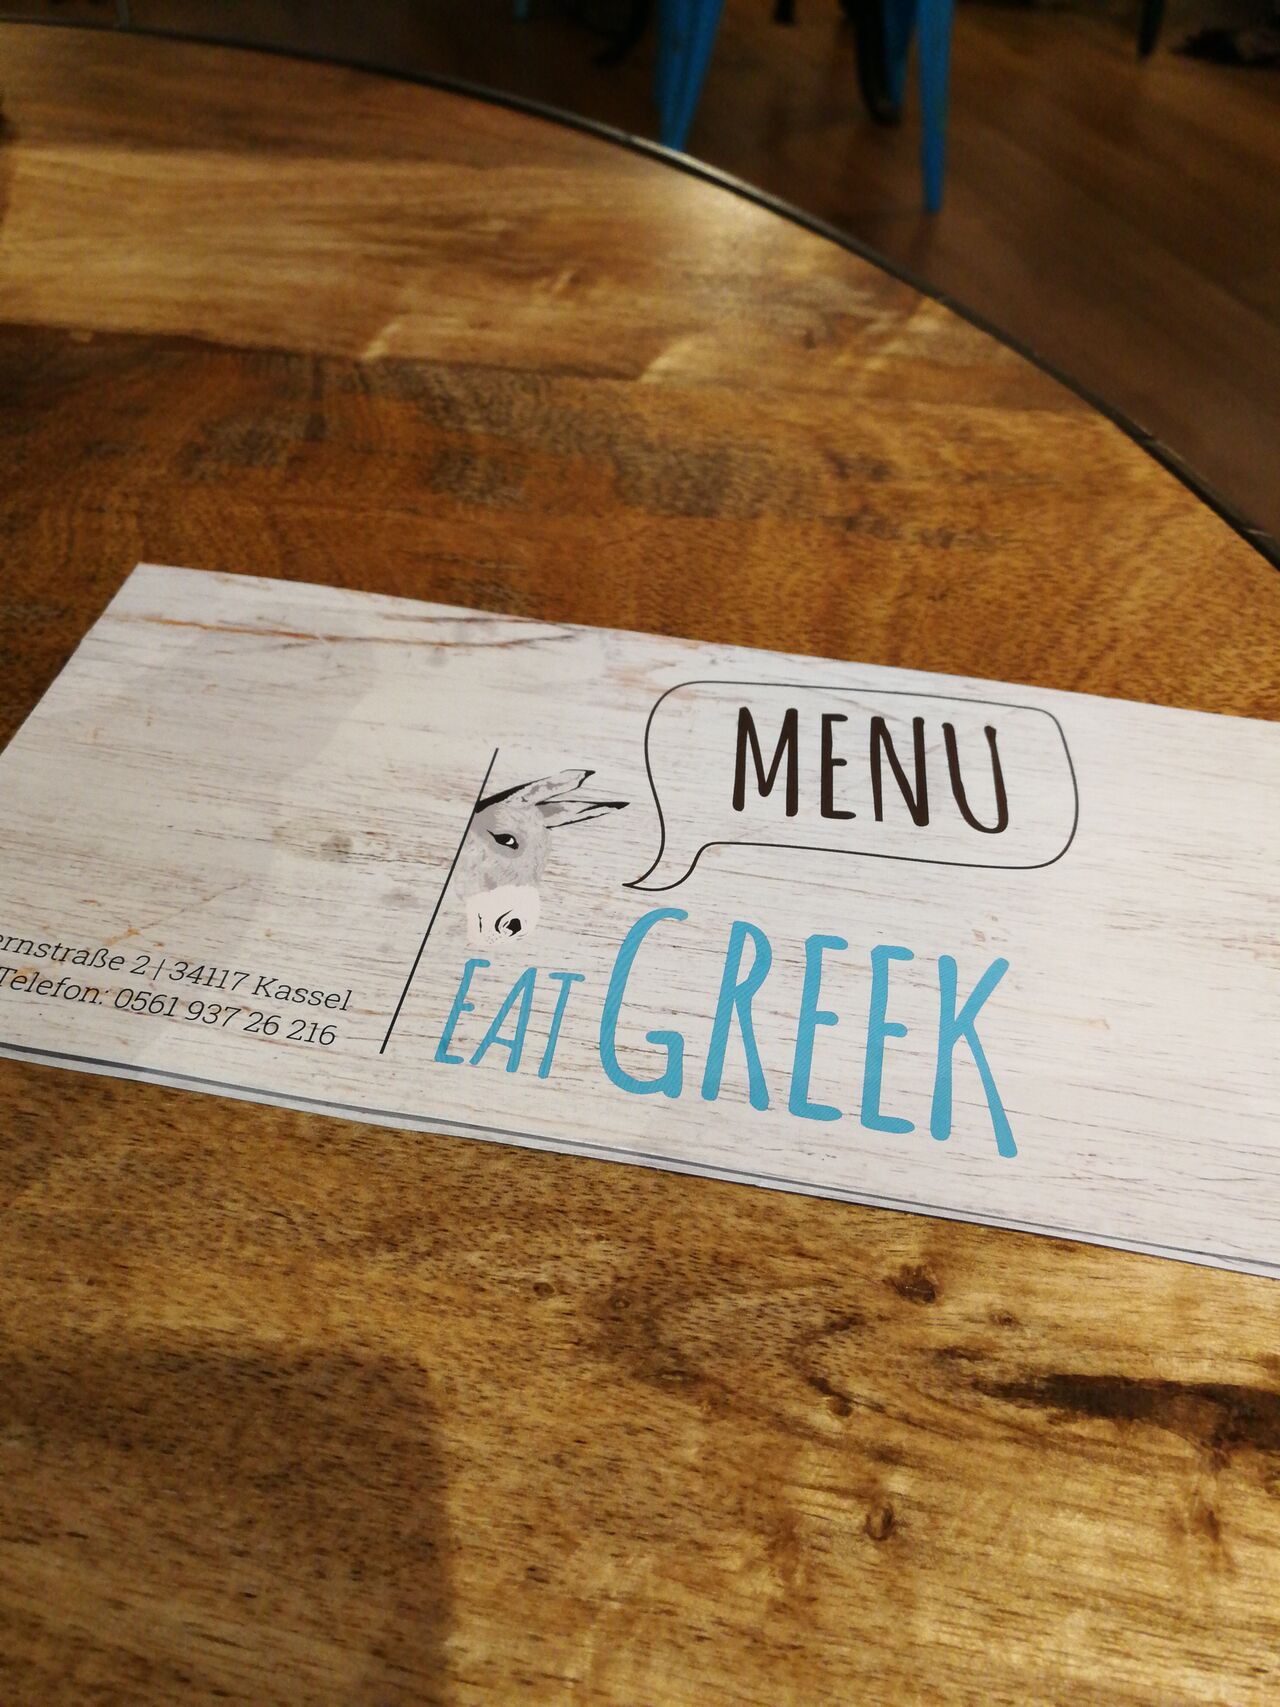 A photo of Eat Greek